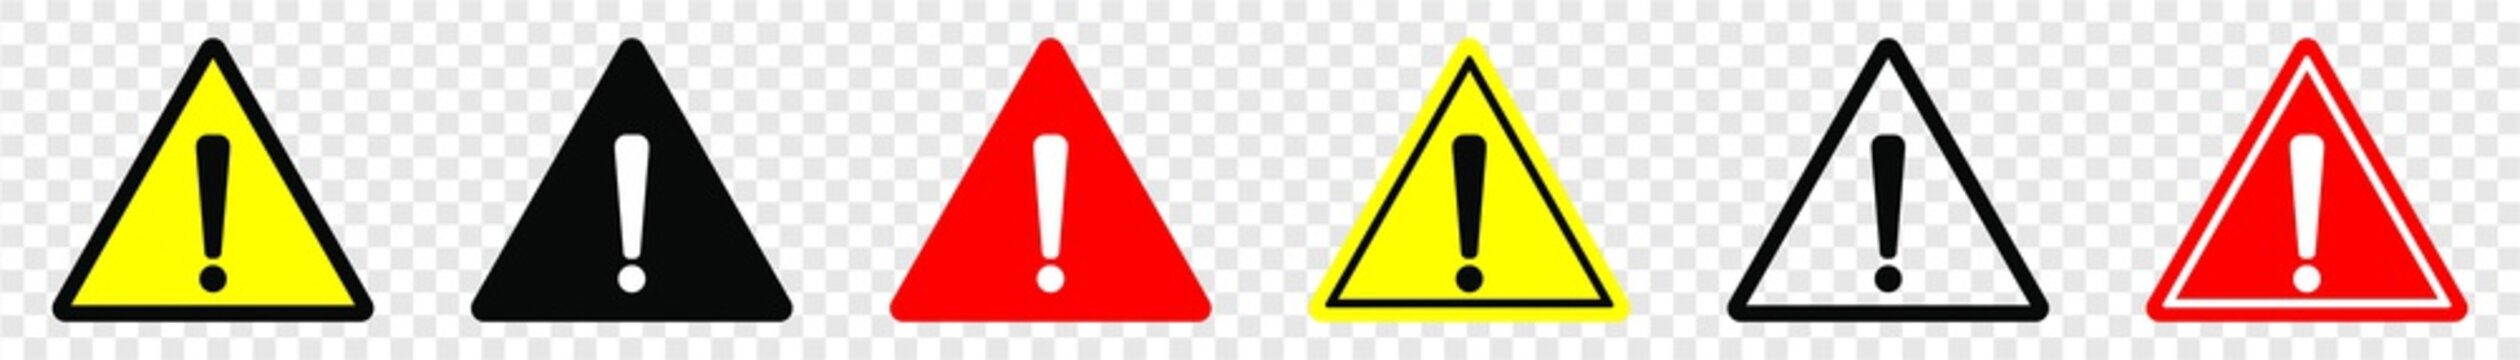 Attention caution danger sign, Exclamation mark sign, Triangular warning symbols icon set, warning sign, Vector illustration